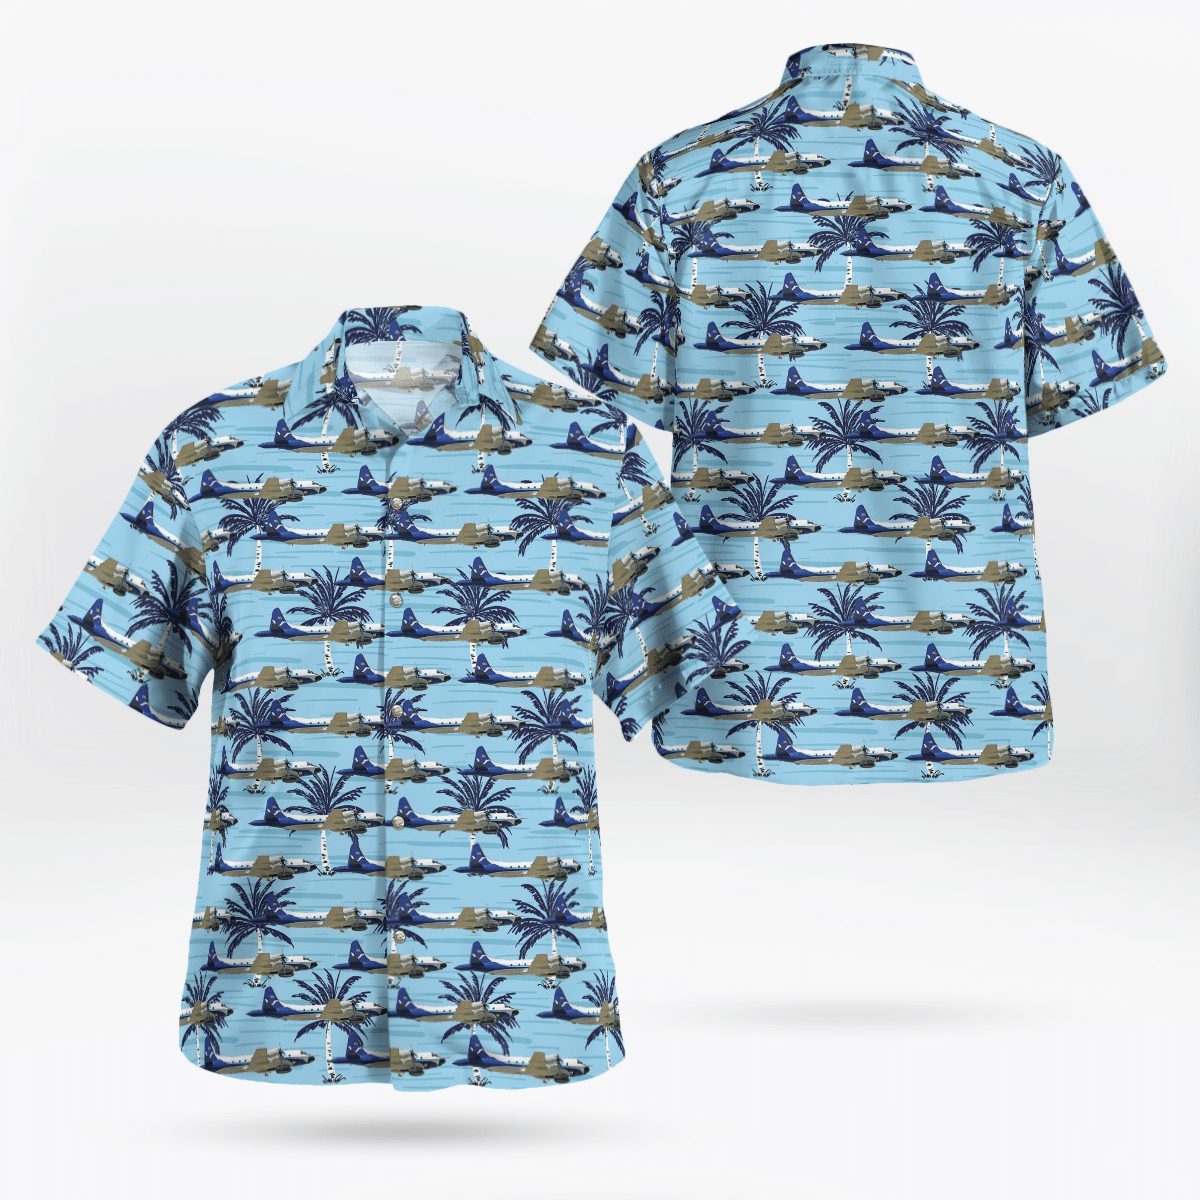 Summer so cool with top new hawaiian shirt below 65